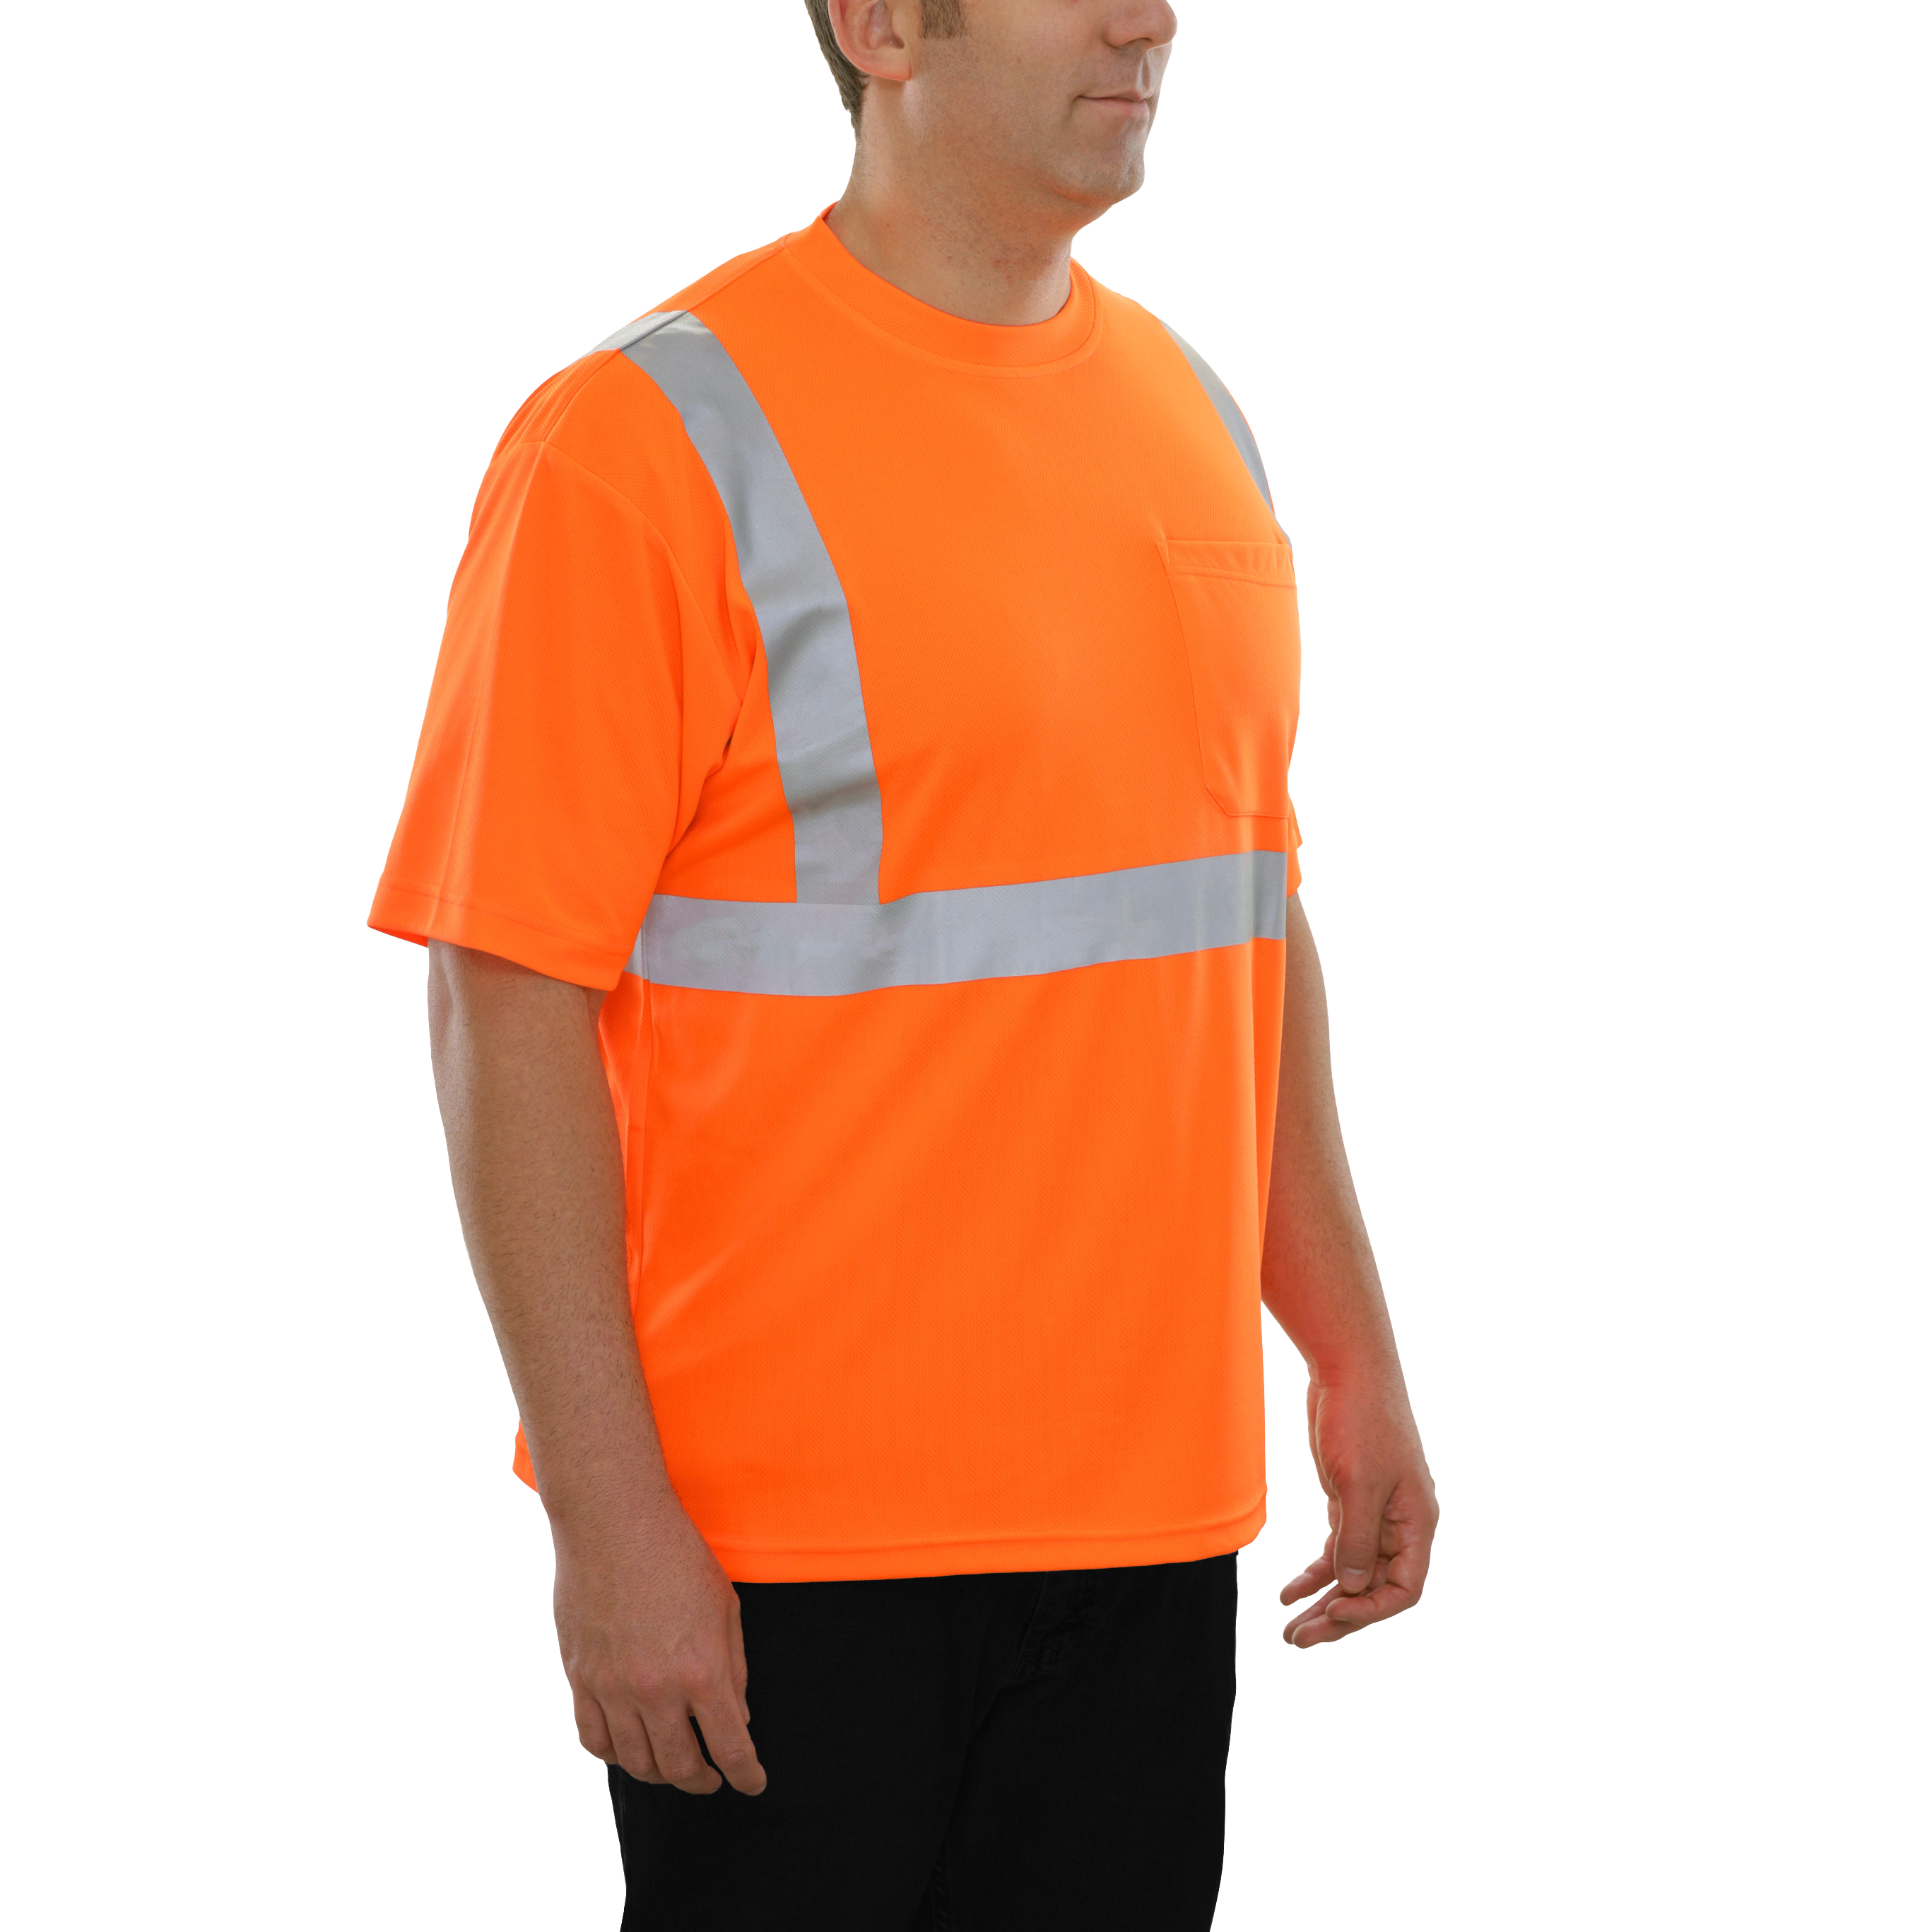 Reflective Apparel High Visibility c Shirt Orange Birdseye-eSafety Supplies, Inc